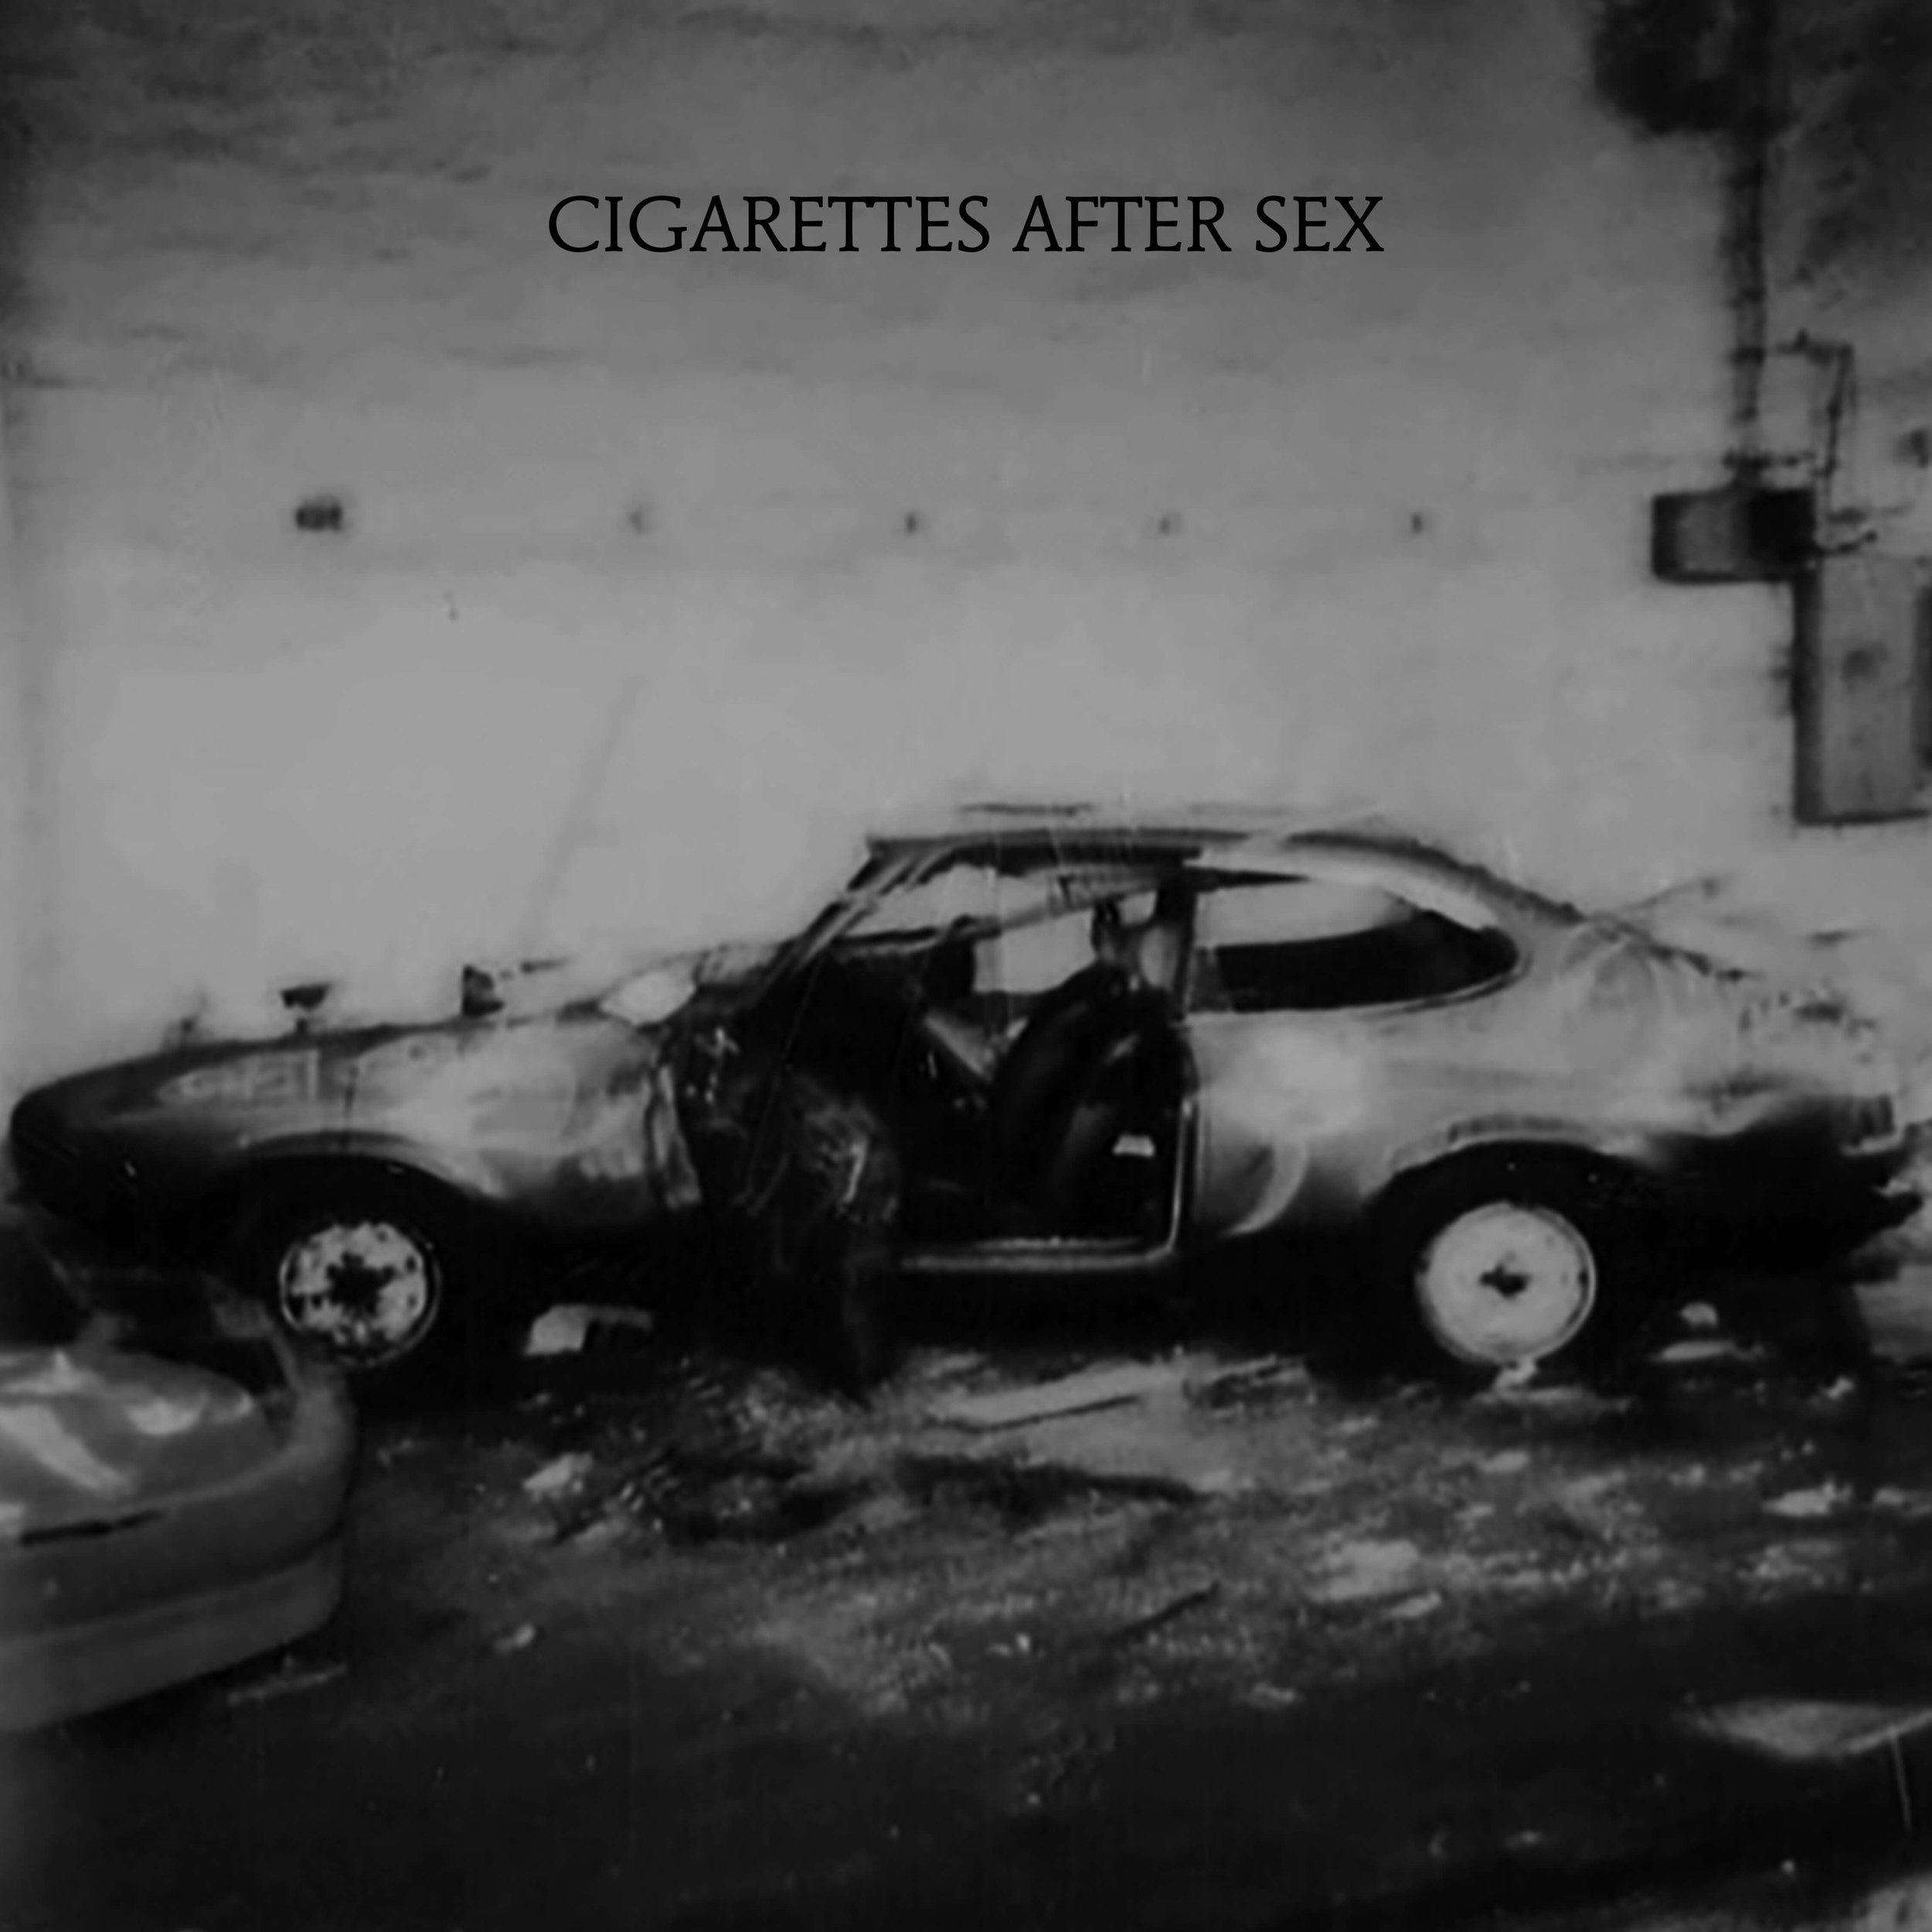 Cigarettes After Sex - Heavenly [Lyrics] 